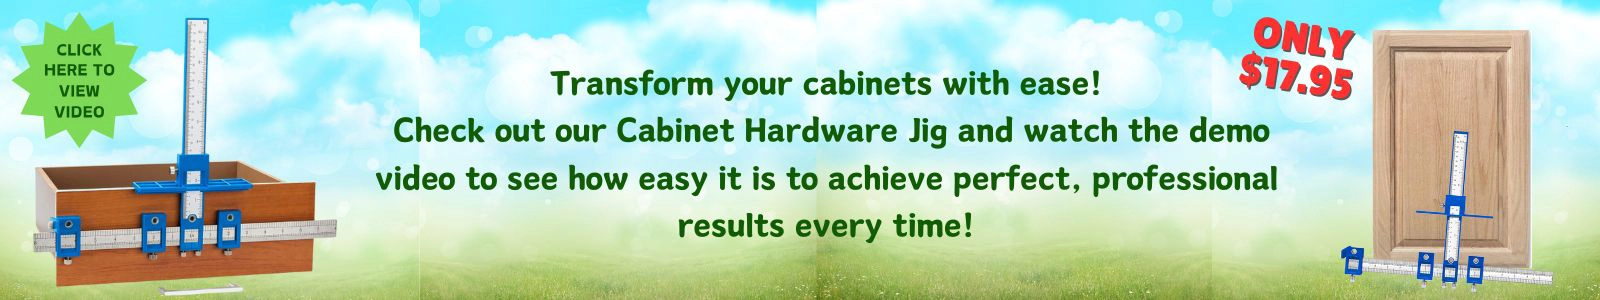 Cabinet Hardware Jig